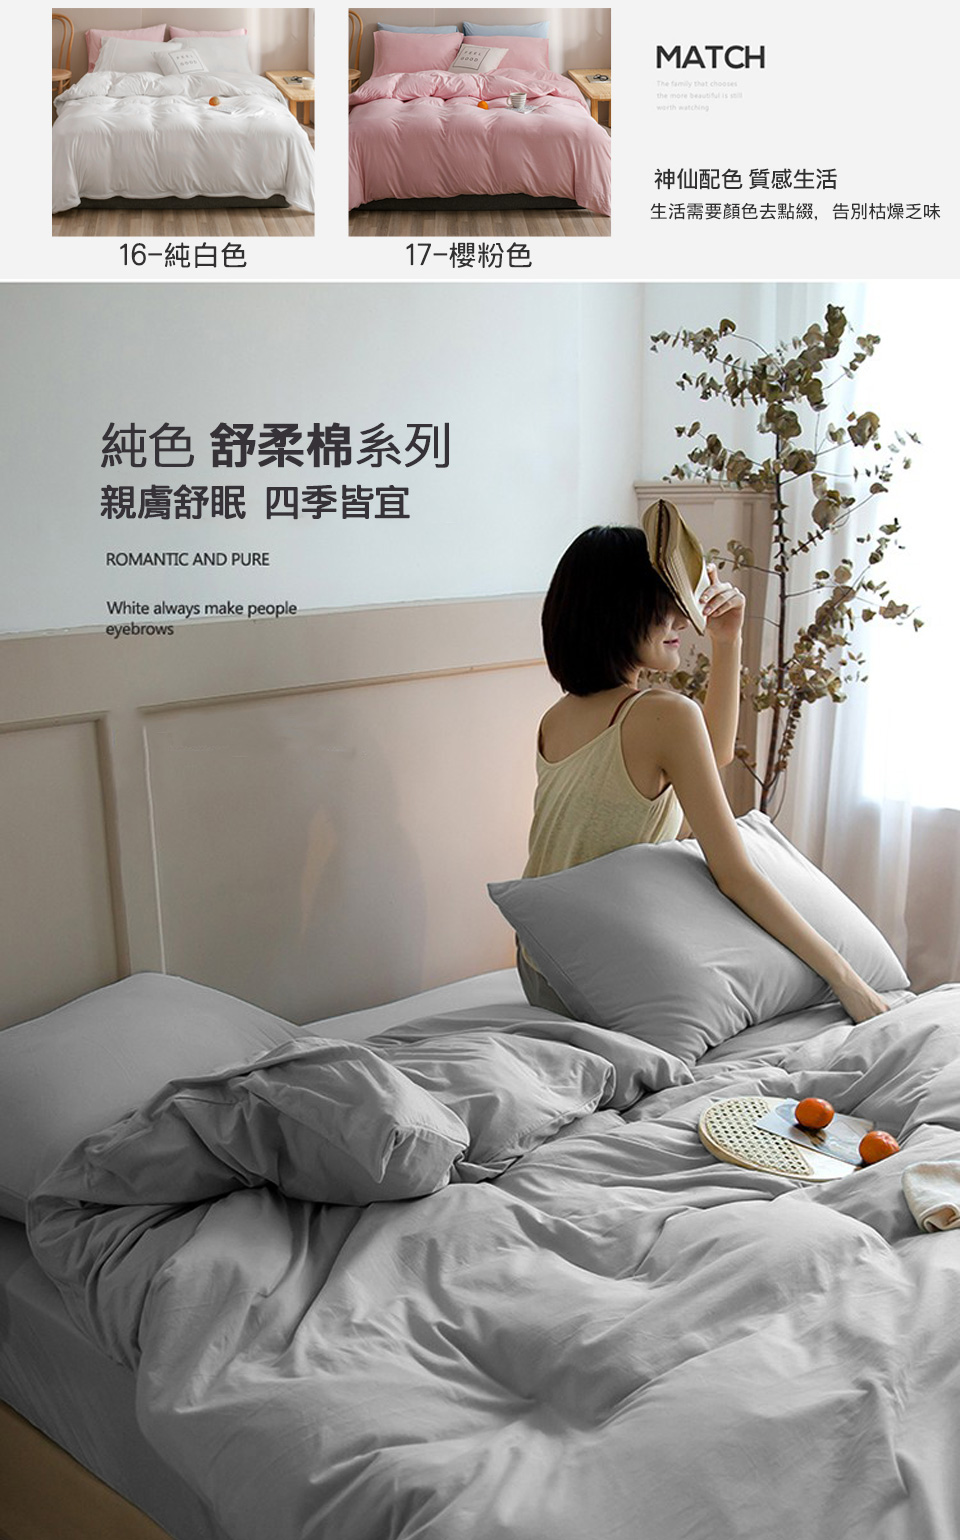 ALAI 寢飾工場 買1送1 台灣製 經典素色床包枕套組or